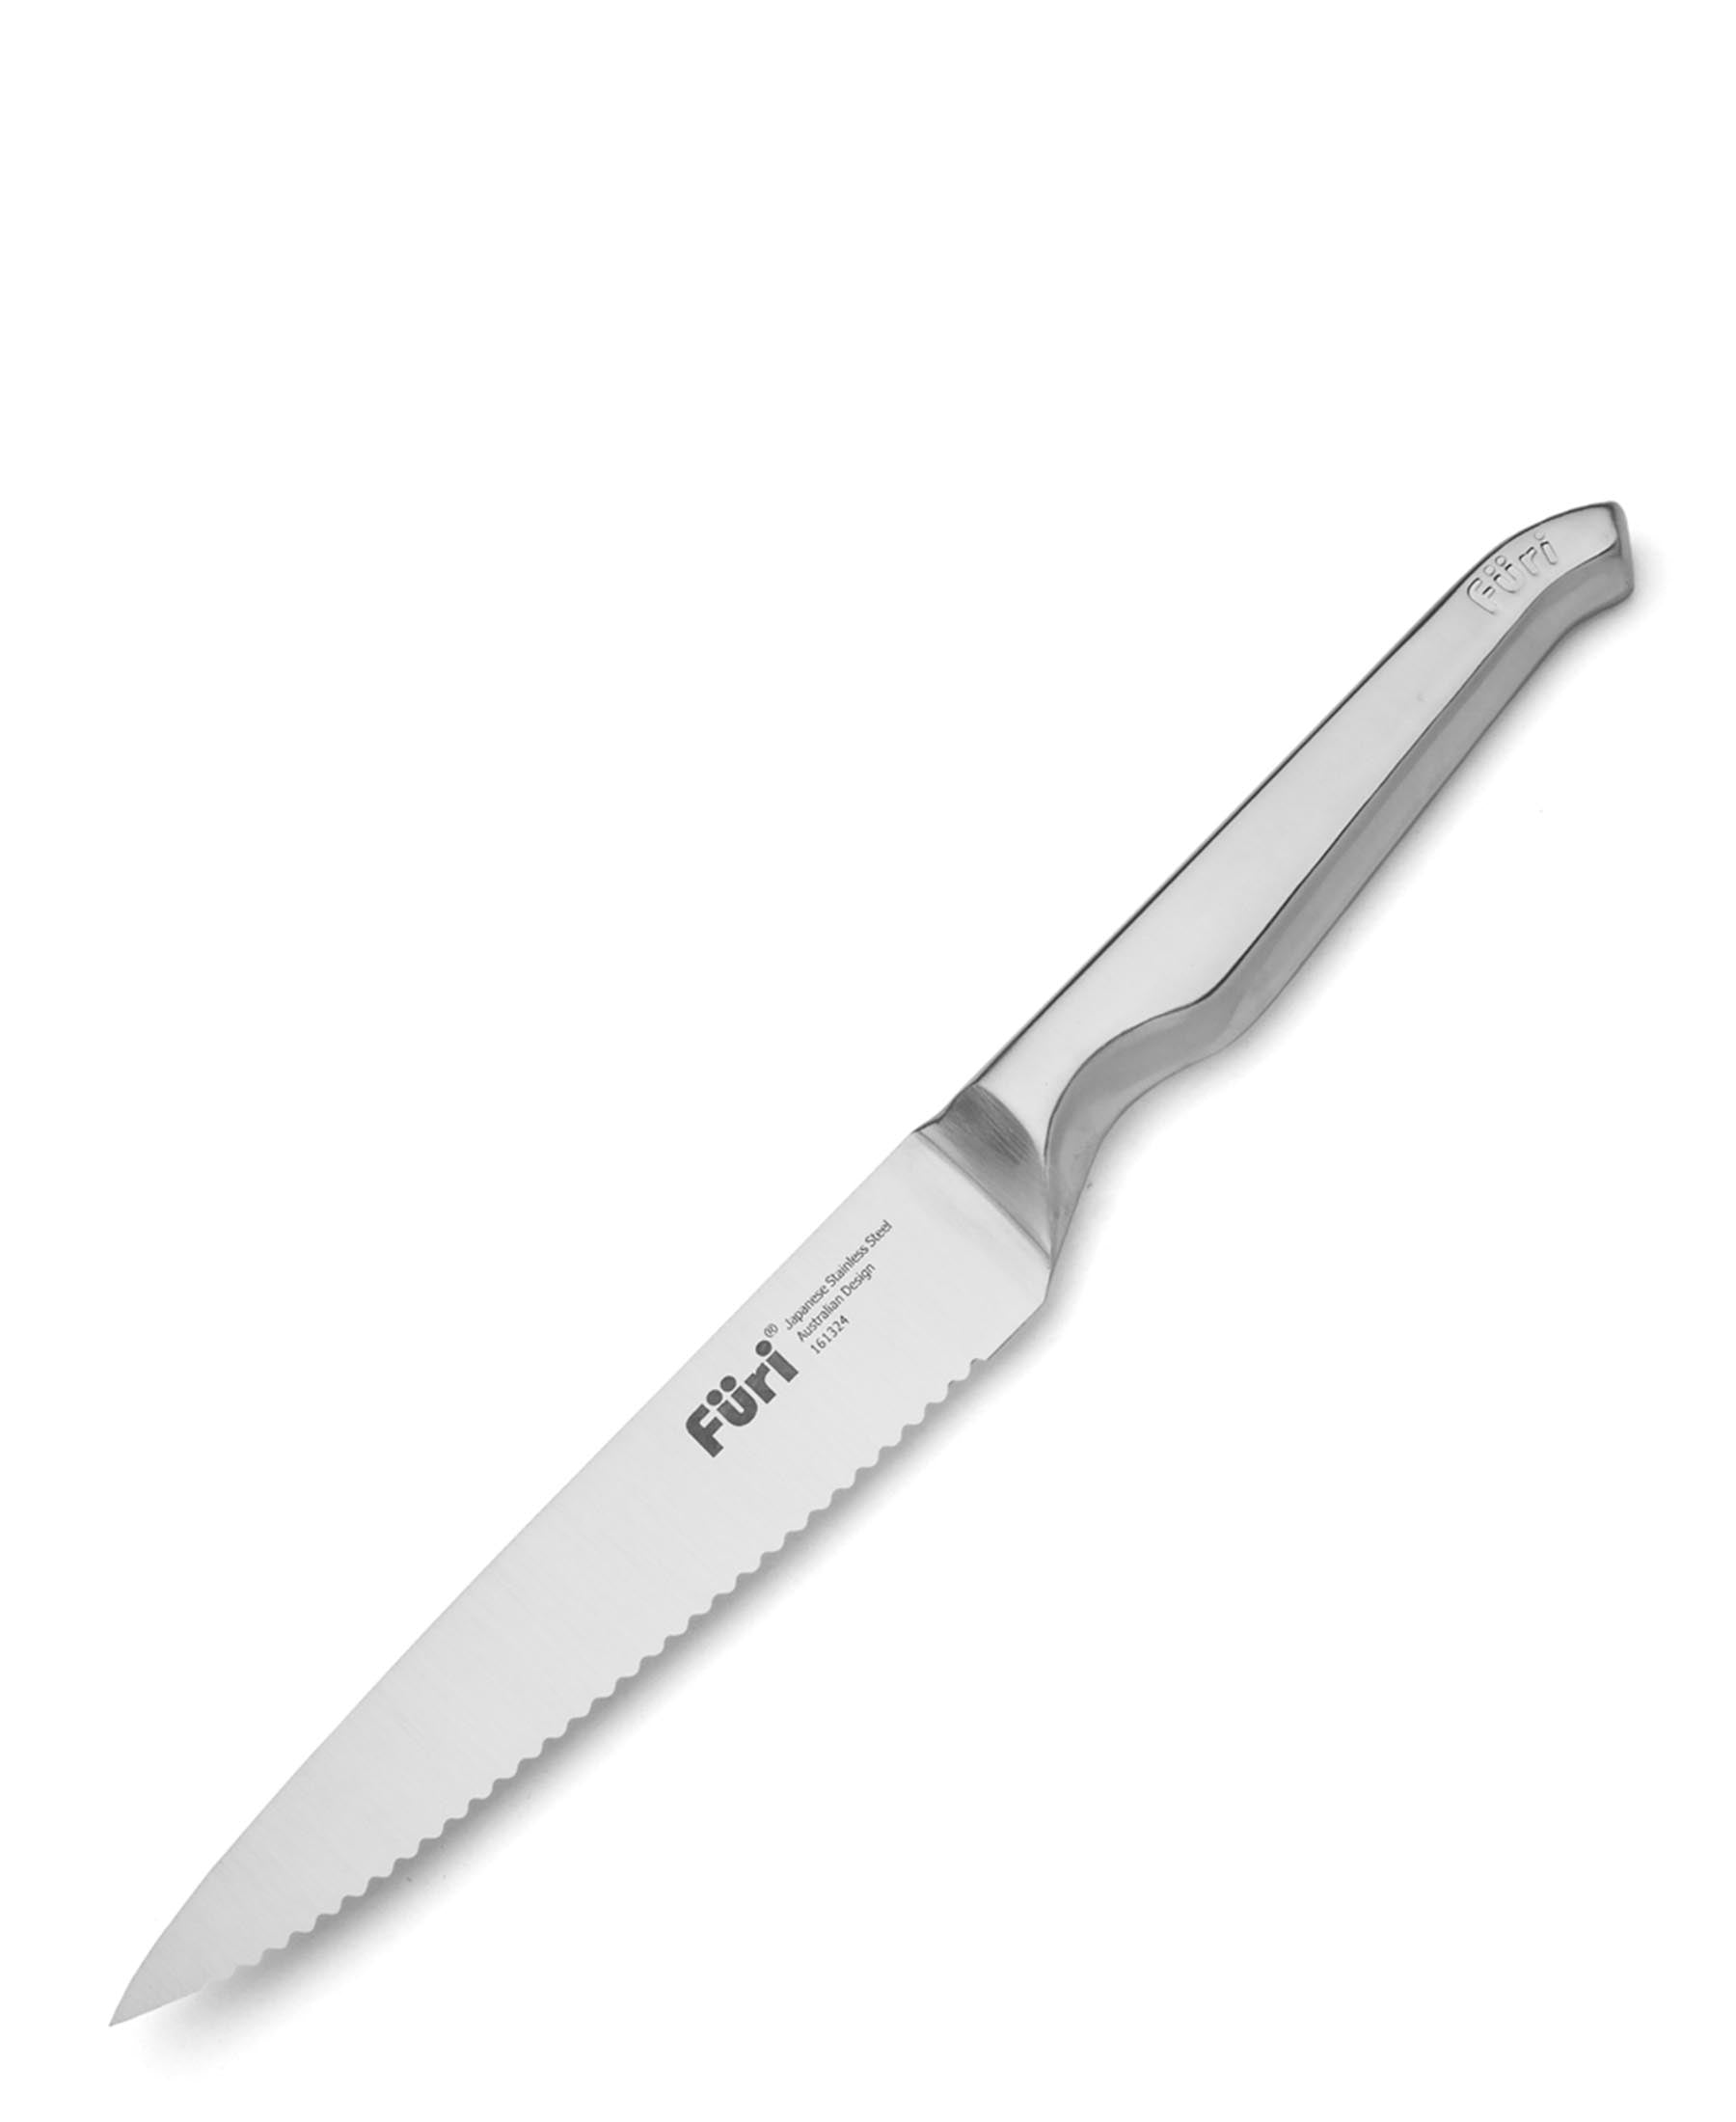 Furi Pro Serrated Multi-Purpose Knife 15cm - Silver